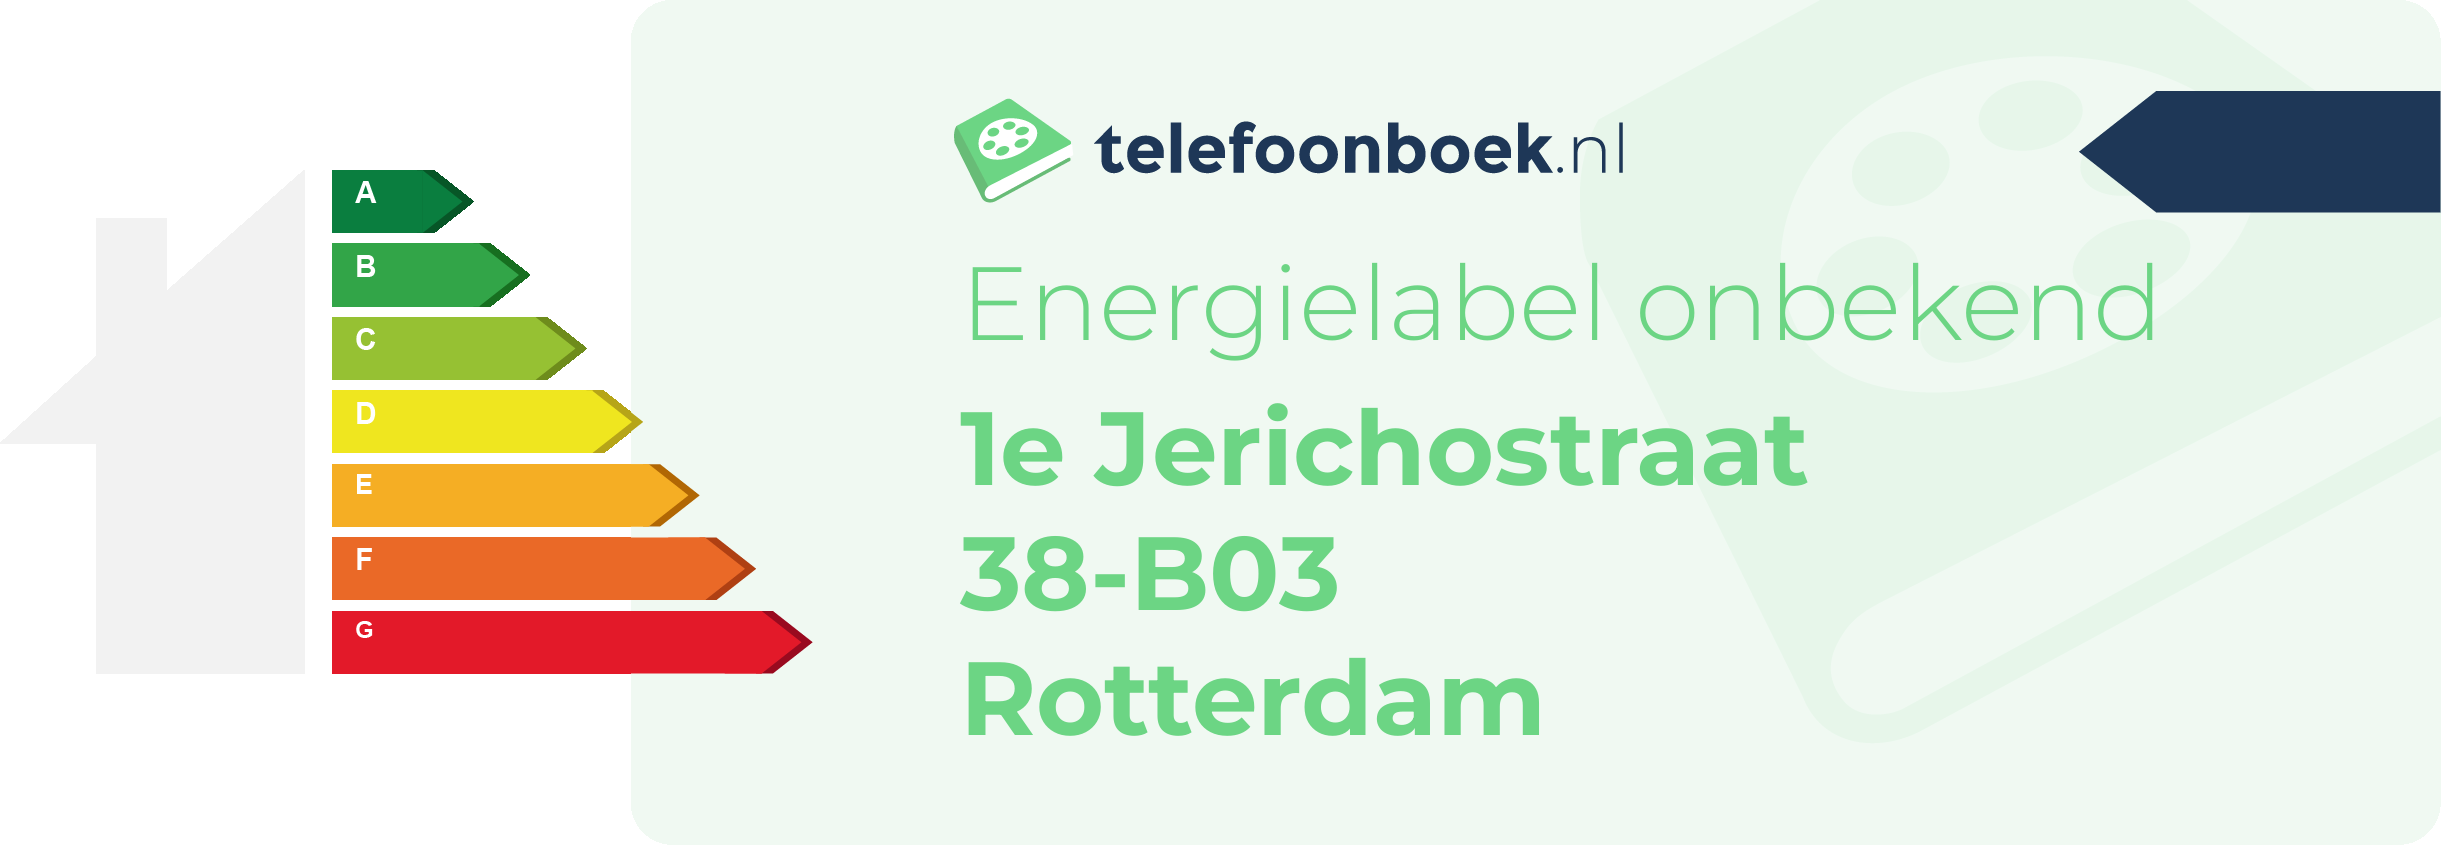 Energielabel 1e Jerichostraat 38-B03 Rotterdam